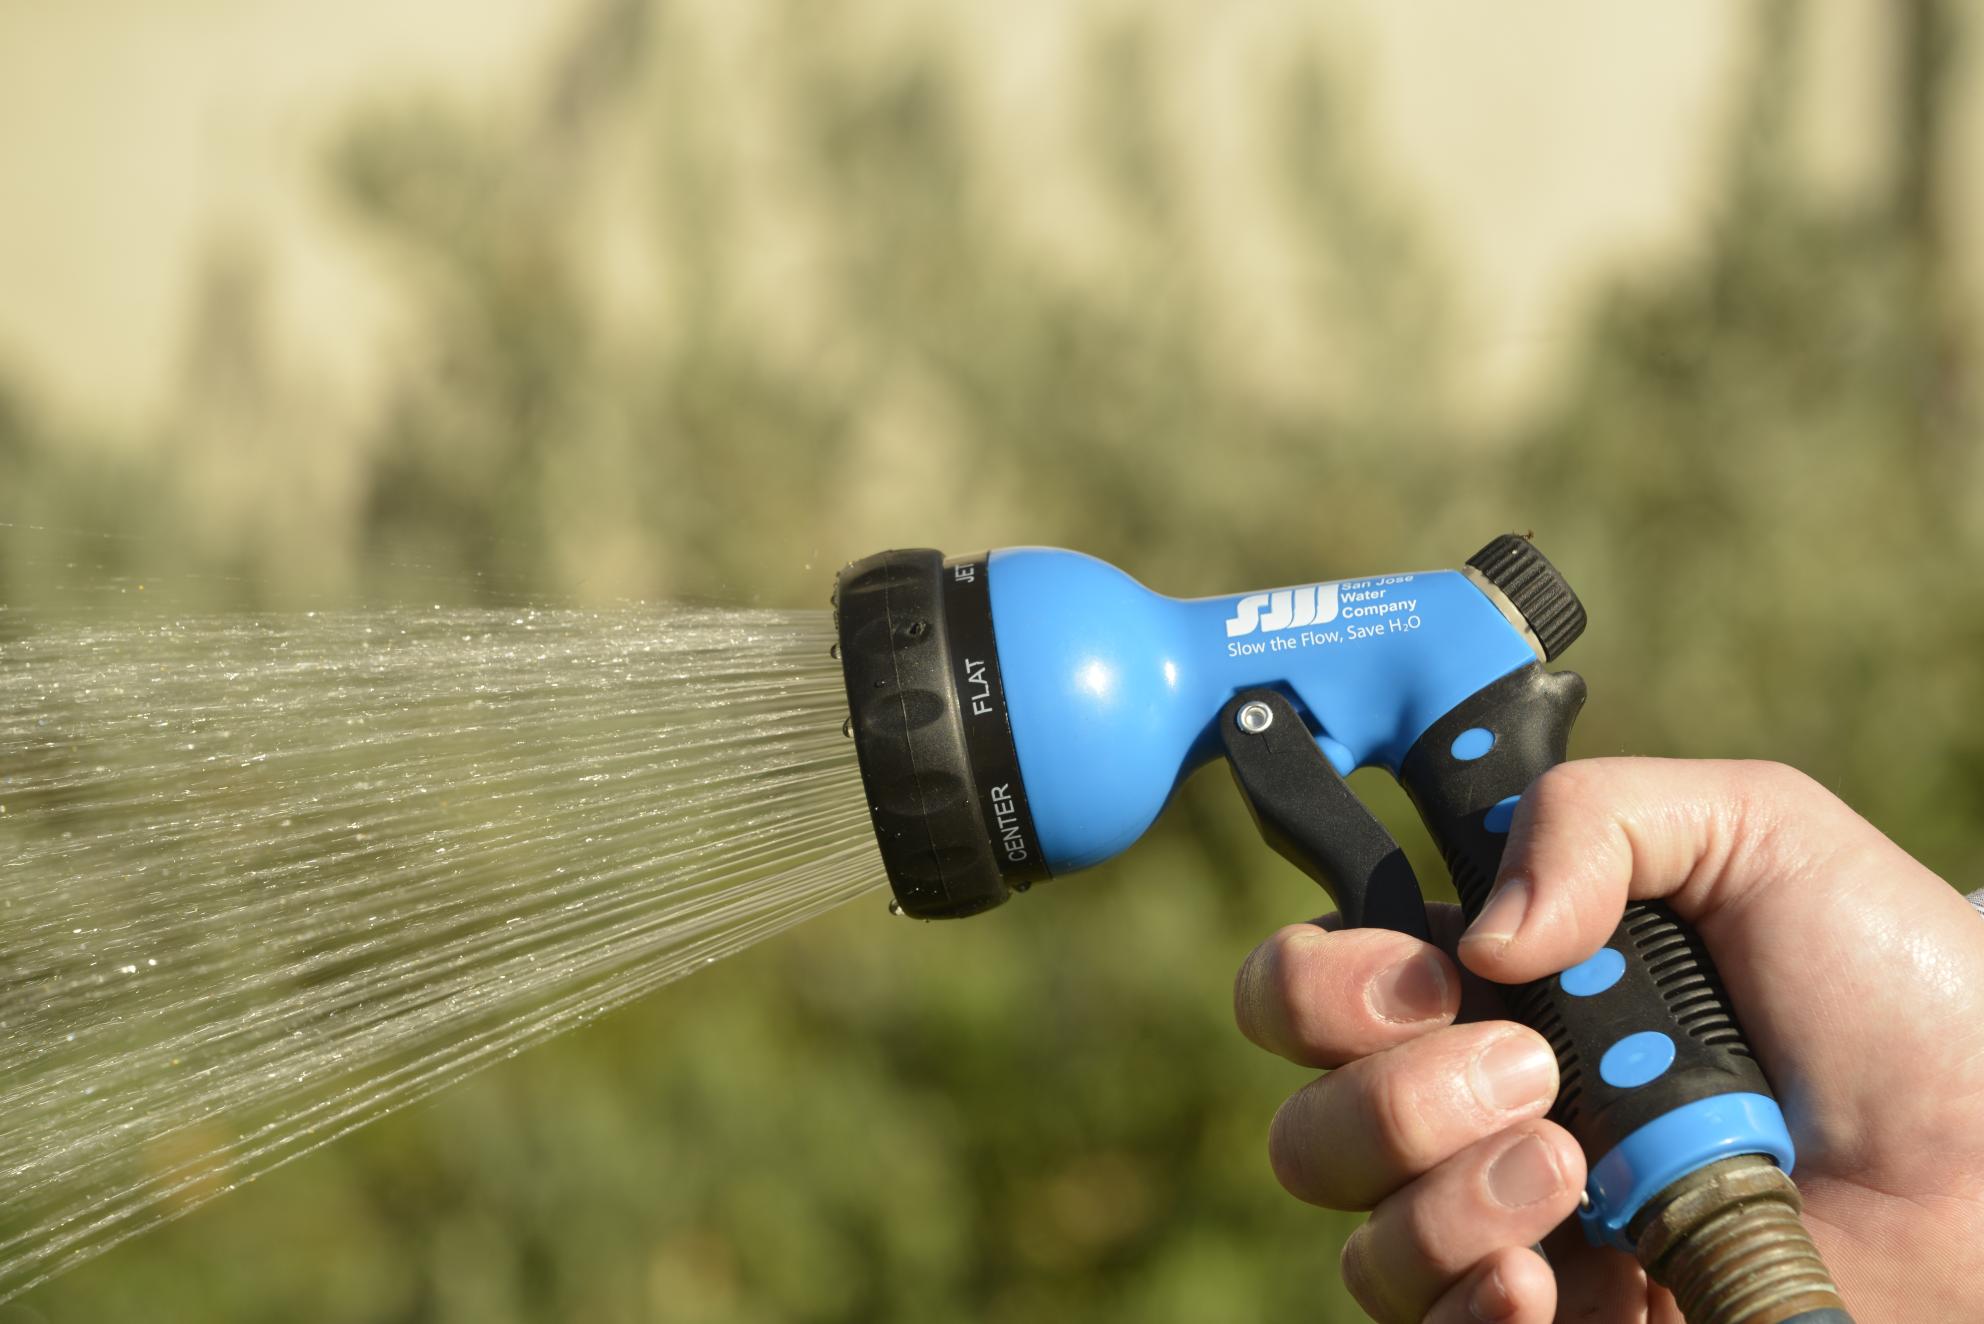 Hand holding San Jose Water-branded garden hose